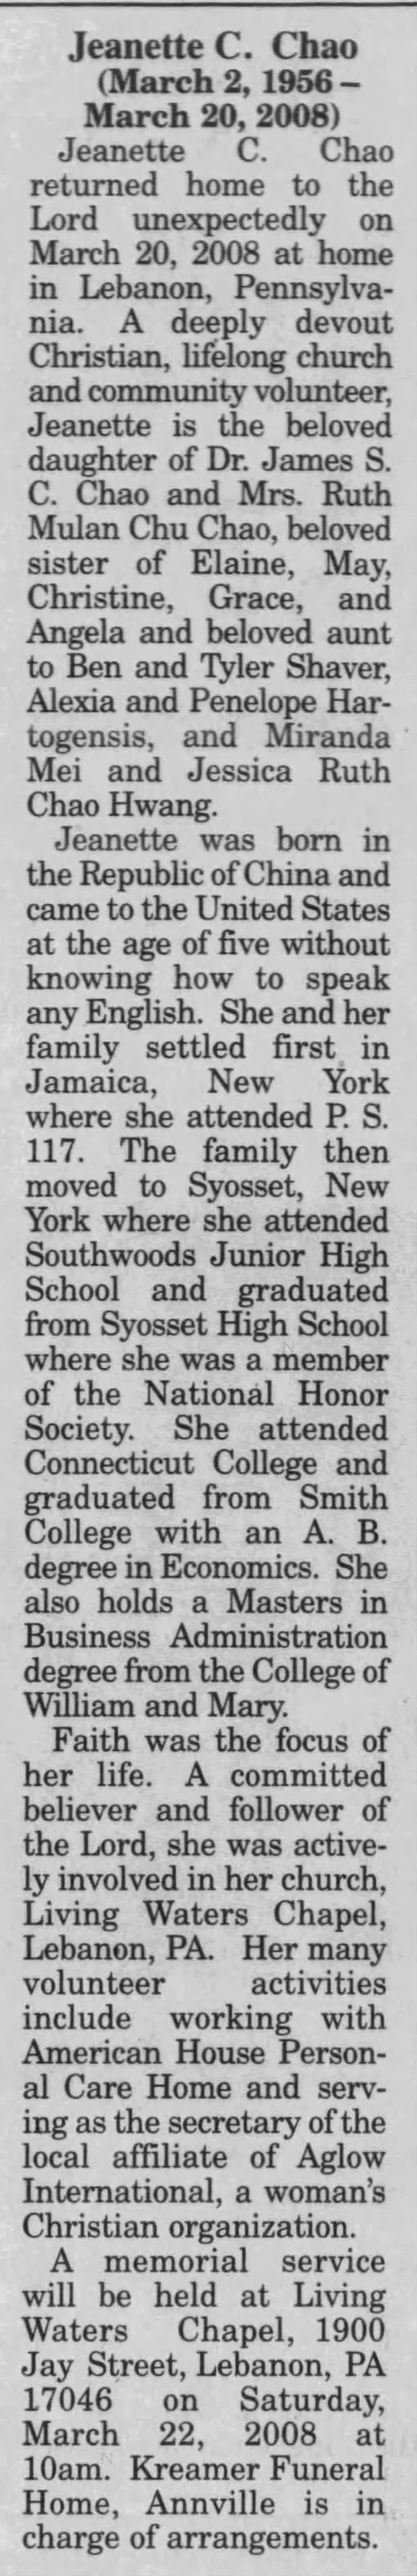 Jeanette C. Chao obituary